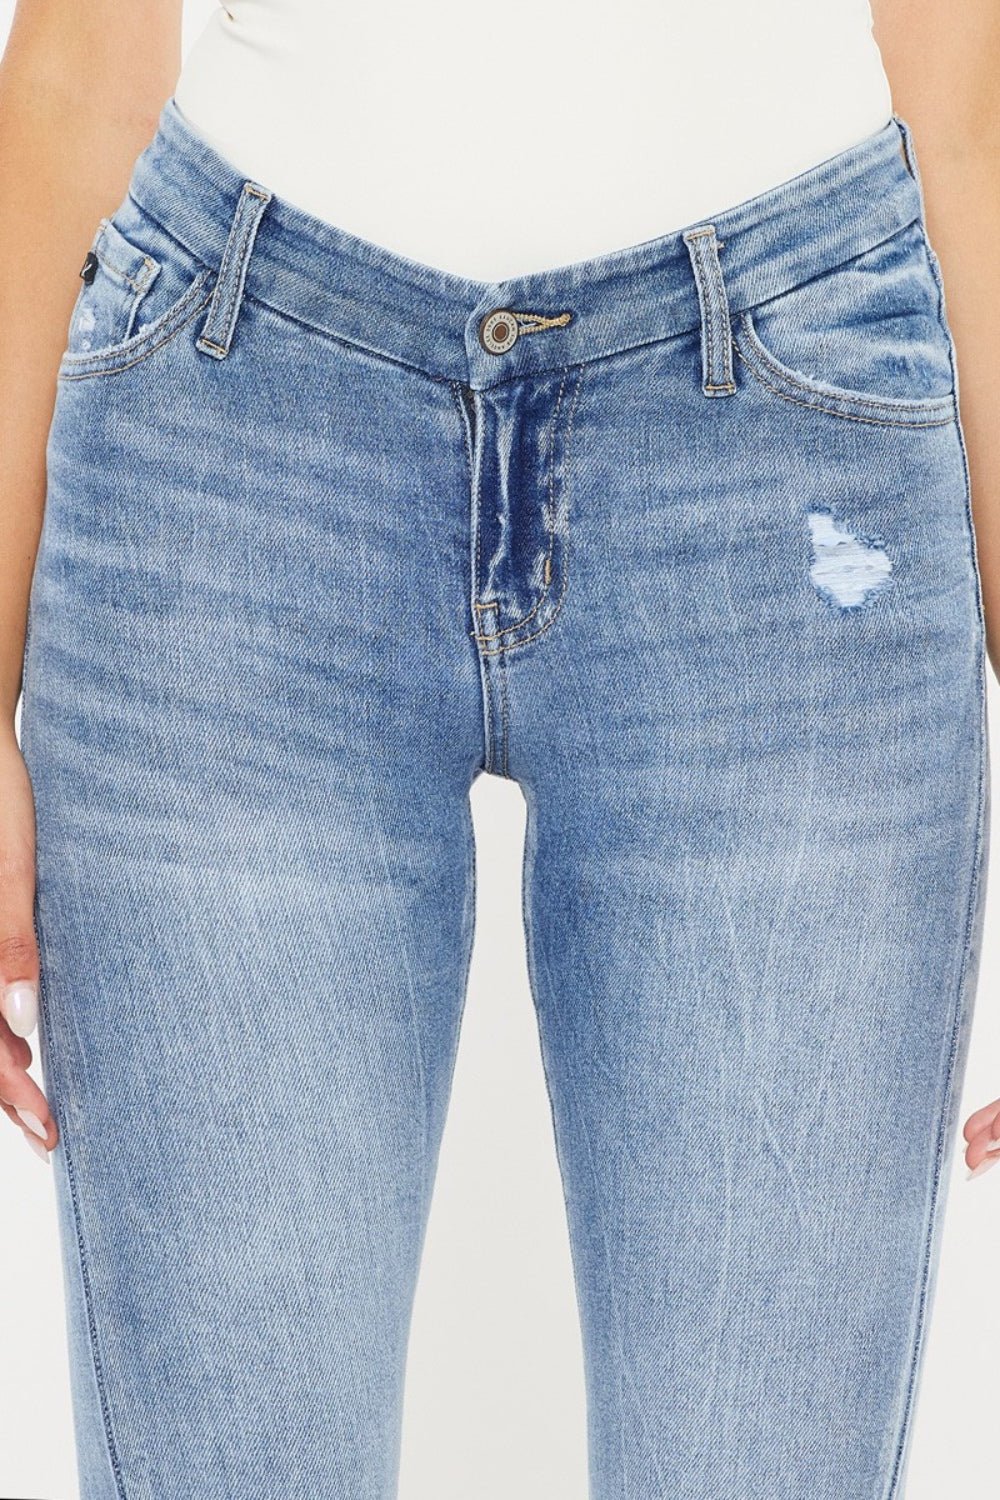 Medium Wash High Waist Distressed Skinny JeansJeansKancan